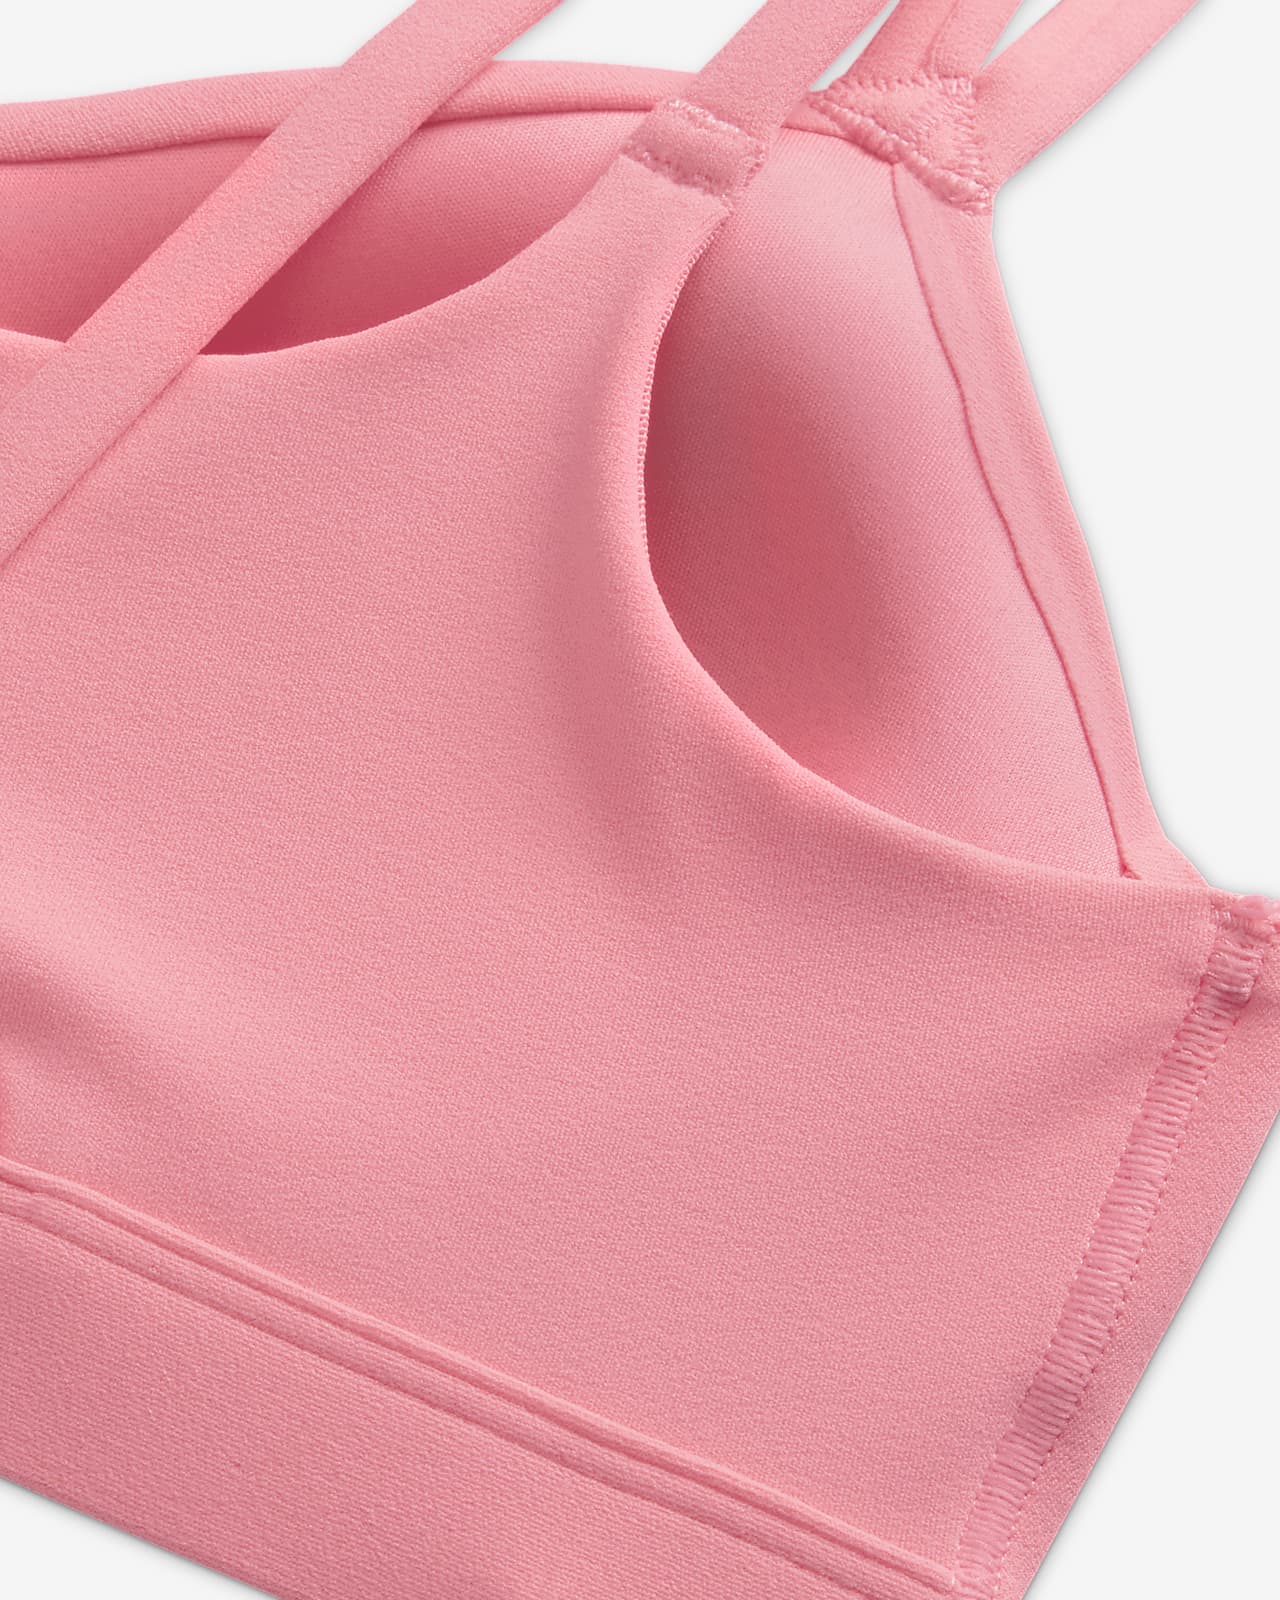 Rockwear Pink Zen Adjustable High Impact Sports Bra - Depop